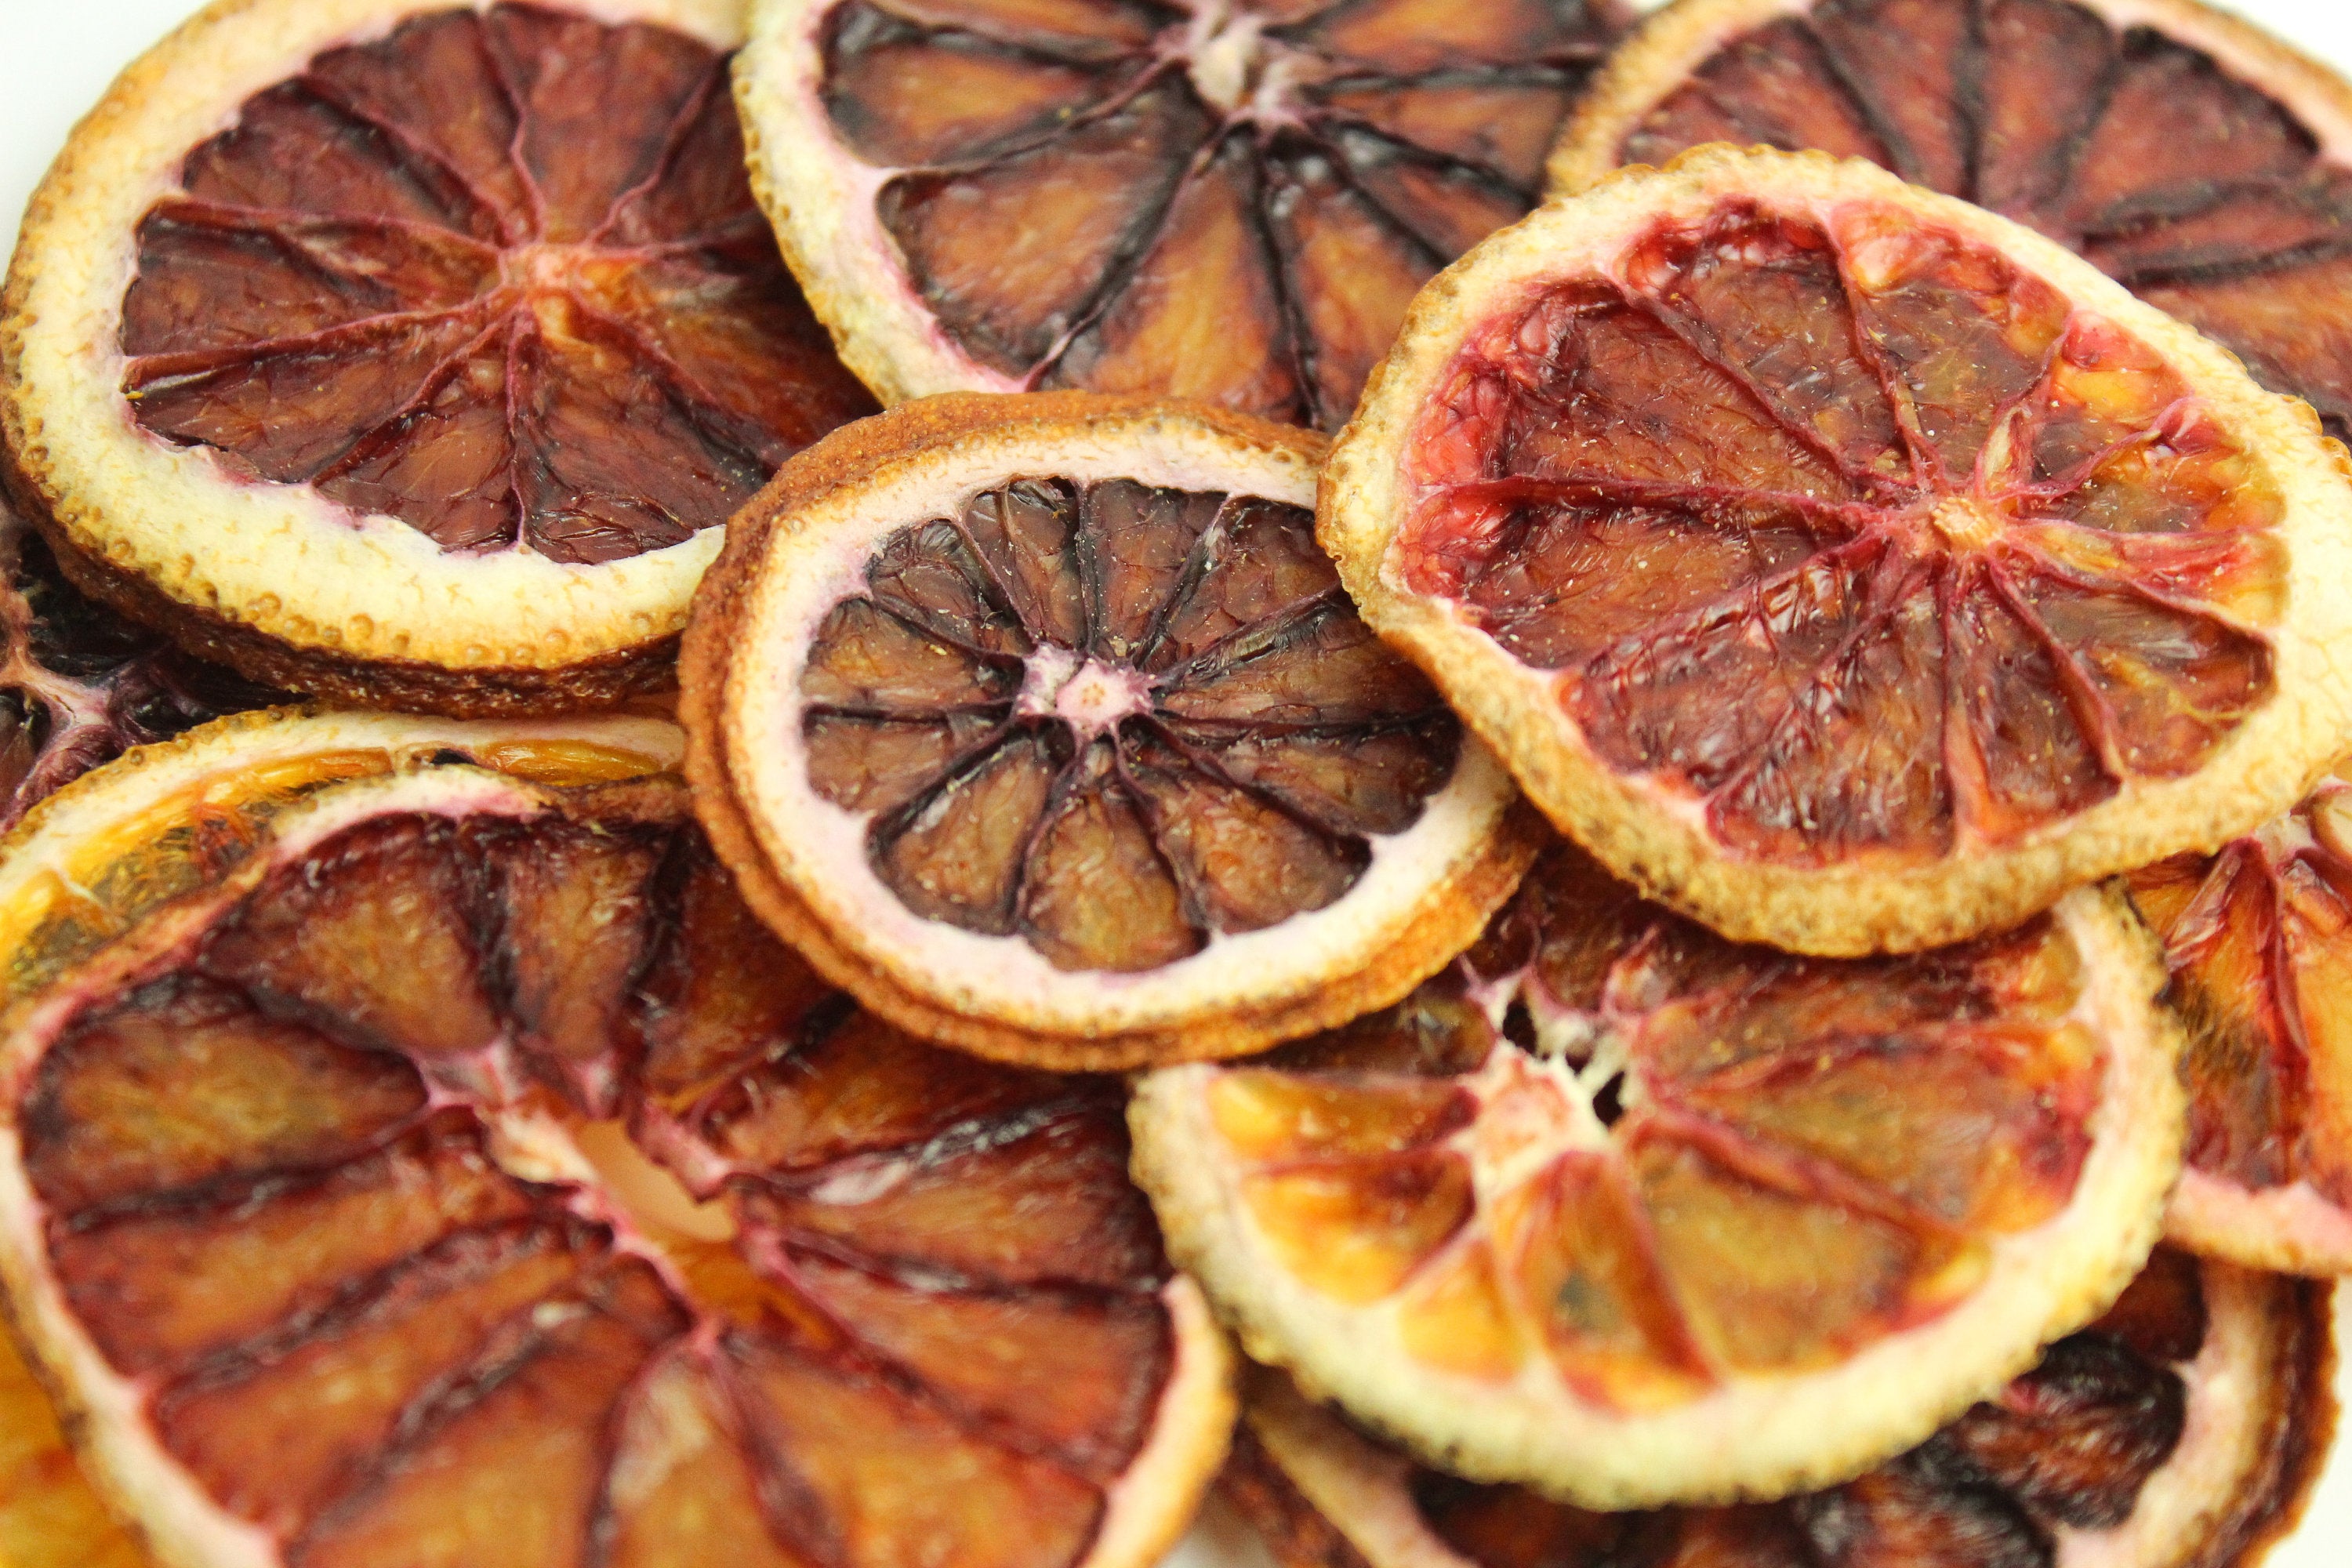 16 Dried Fruits Sampler, 2 of Each Orange, Grapefruit, Tangerine, Lemon, Lime, Blood Orange, Kiwi and Carambola, Natural Organic Fruits